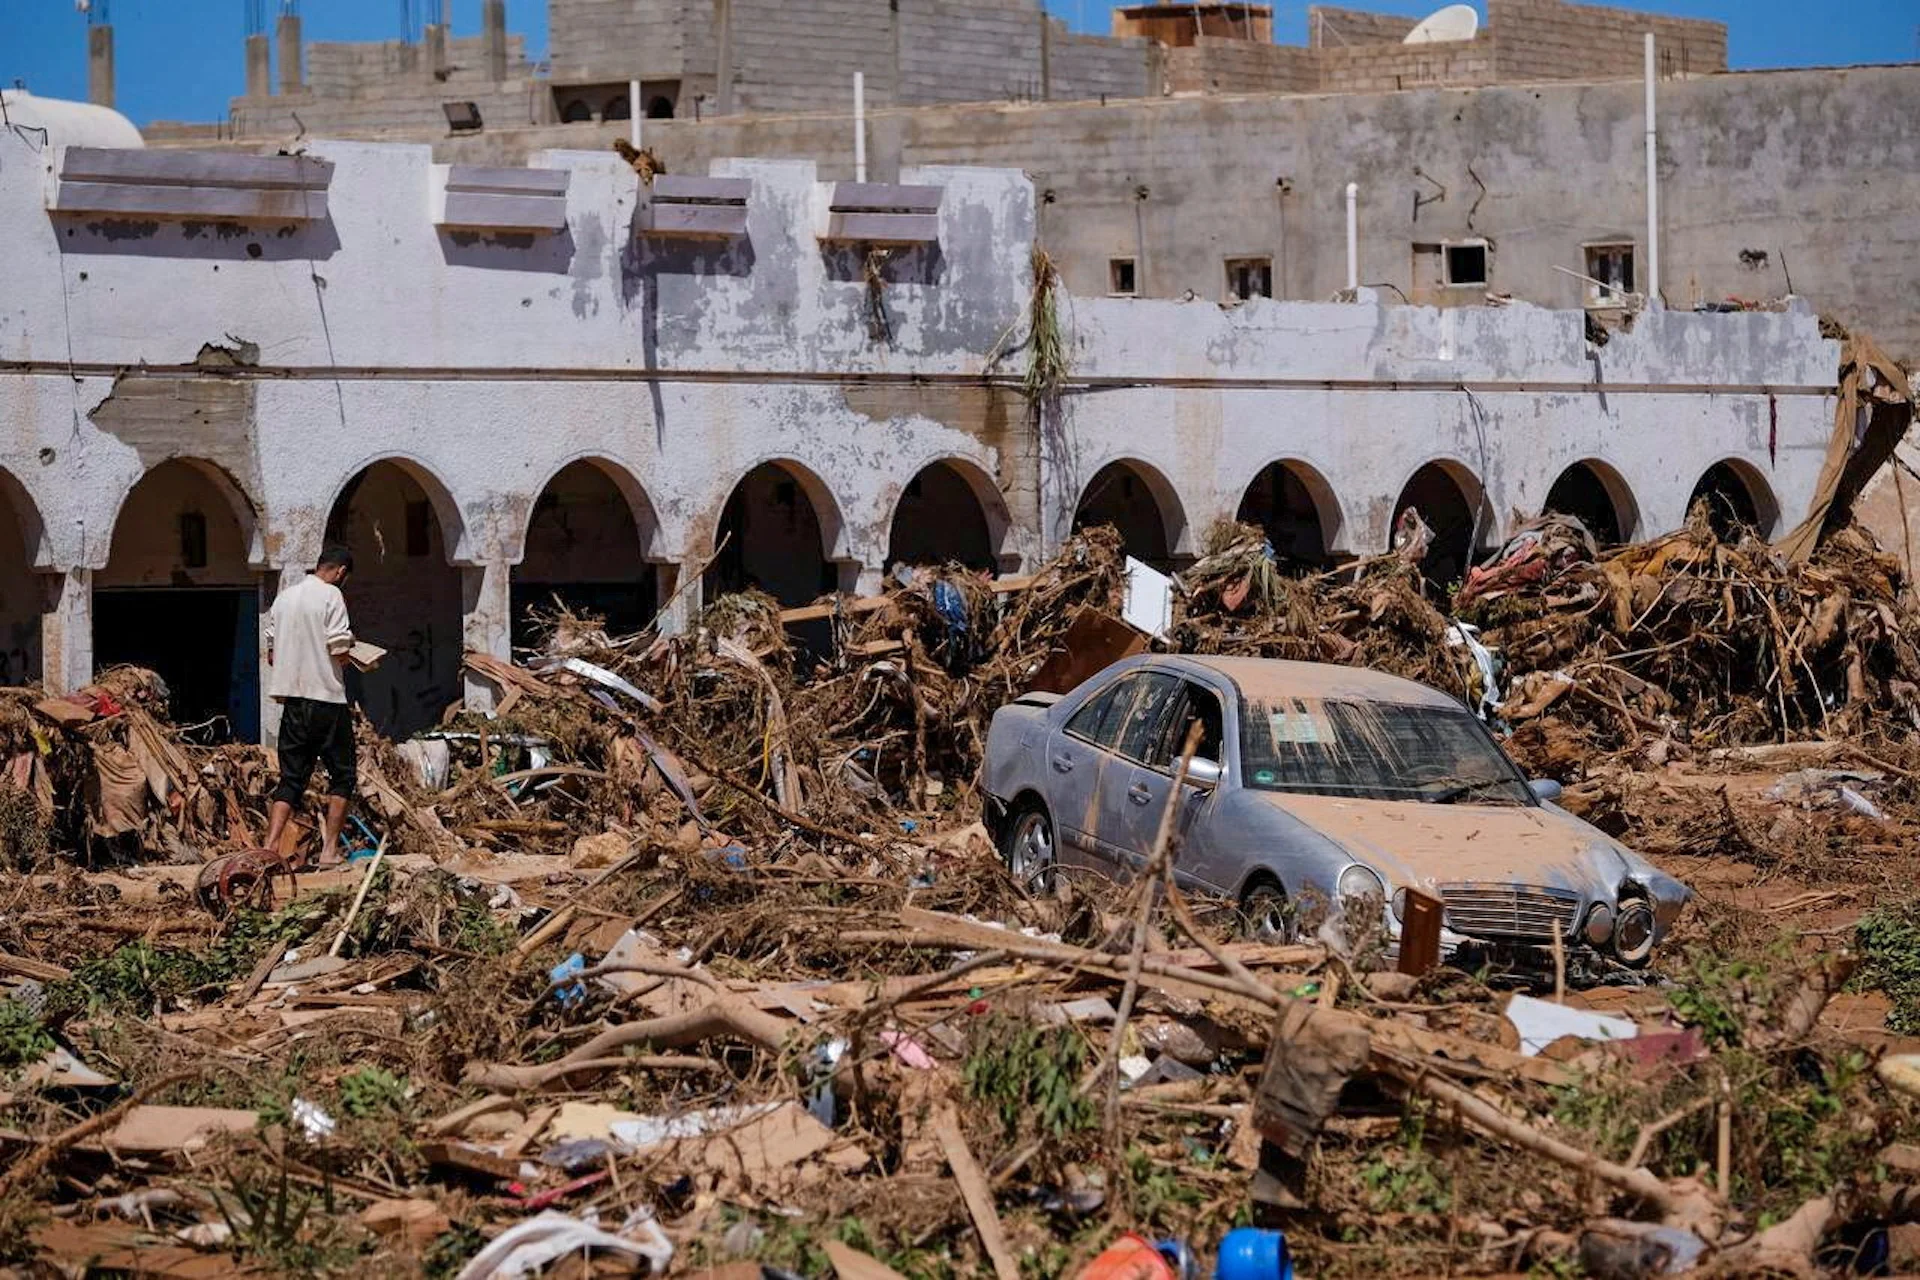 Catastrophic Libya flood kills thousands, relatives search for survivors